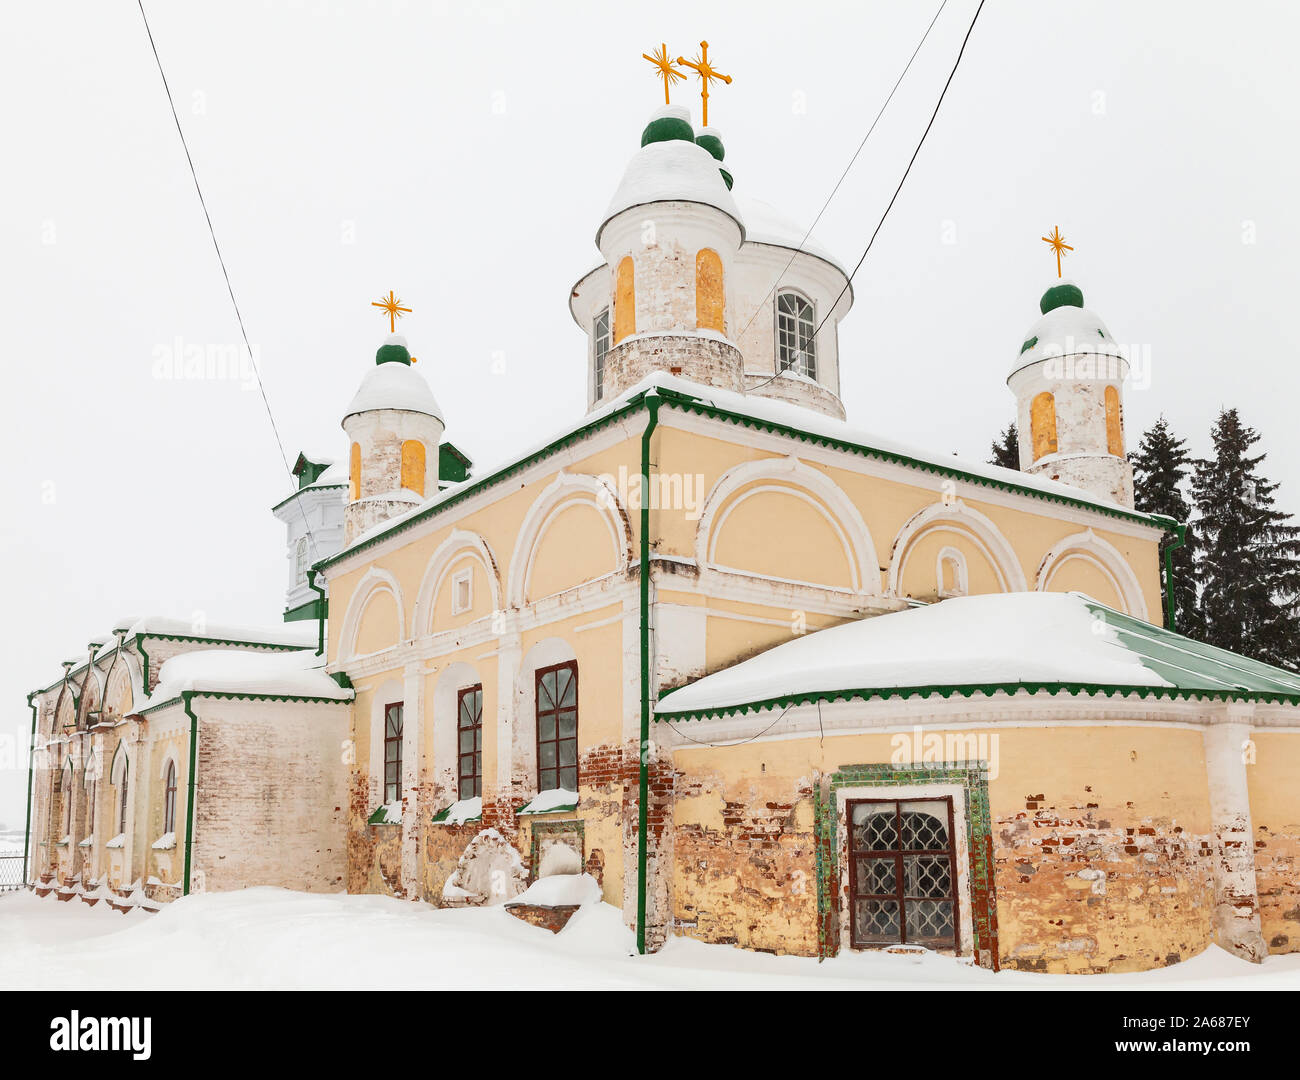 Kathedrale des Hl. Johannes von ustjug im Winter, Weliki Ustjug, Wologda Gebiet, Russland Stockfoto